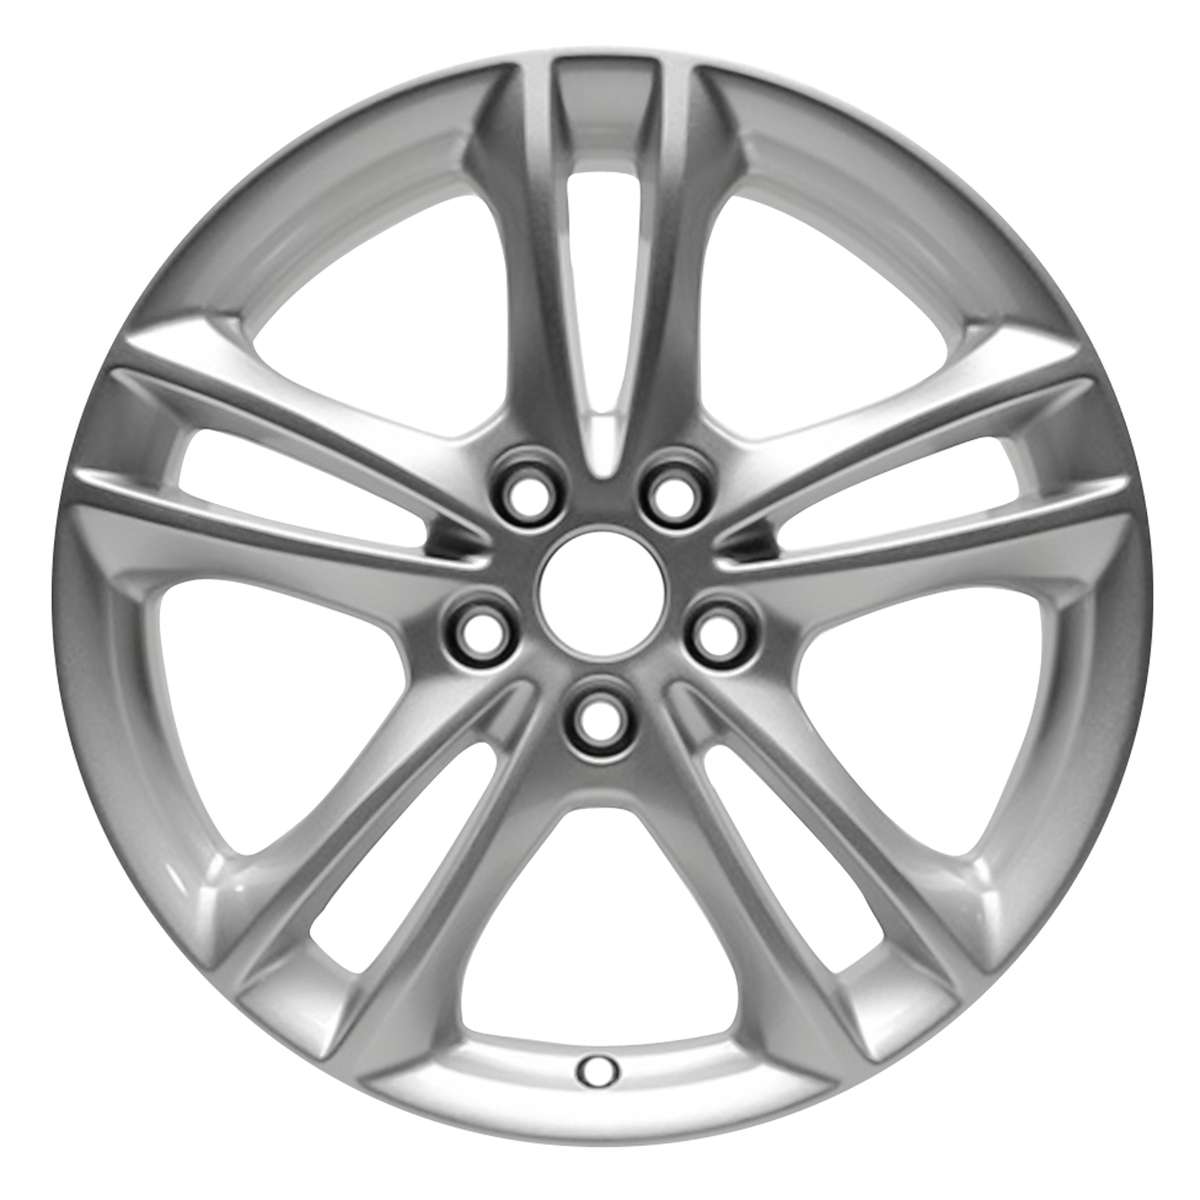 2018 Ford Fusion 17" OEM Wheel Rim W3984SB